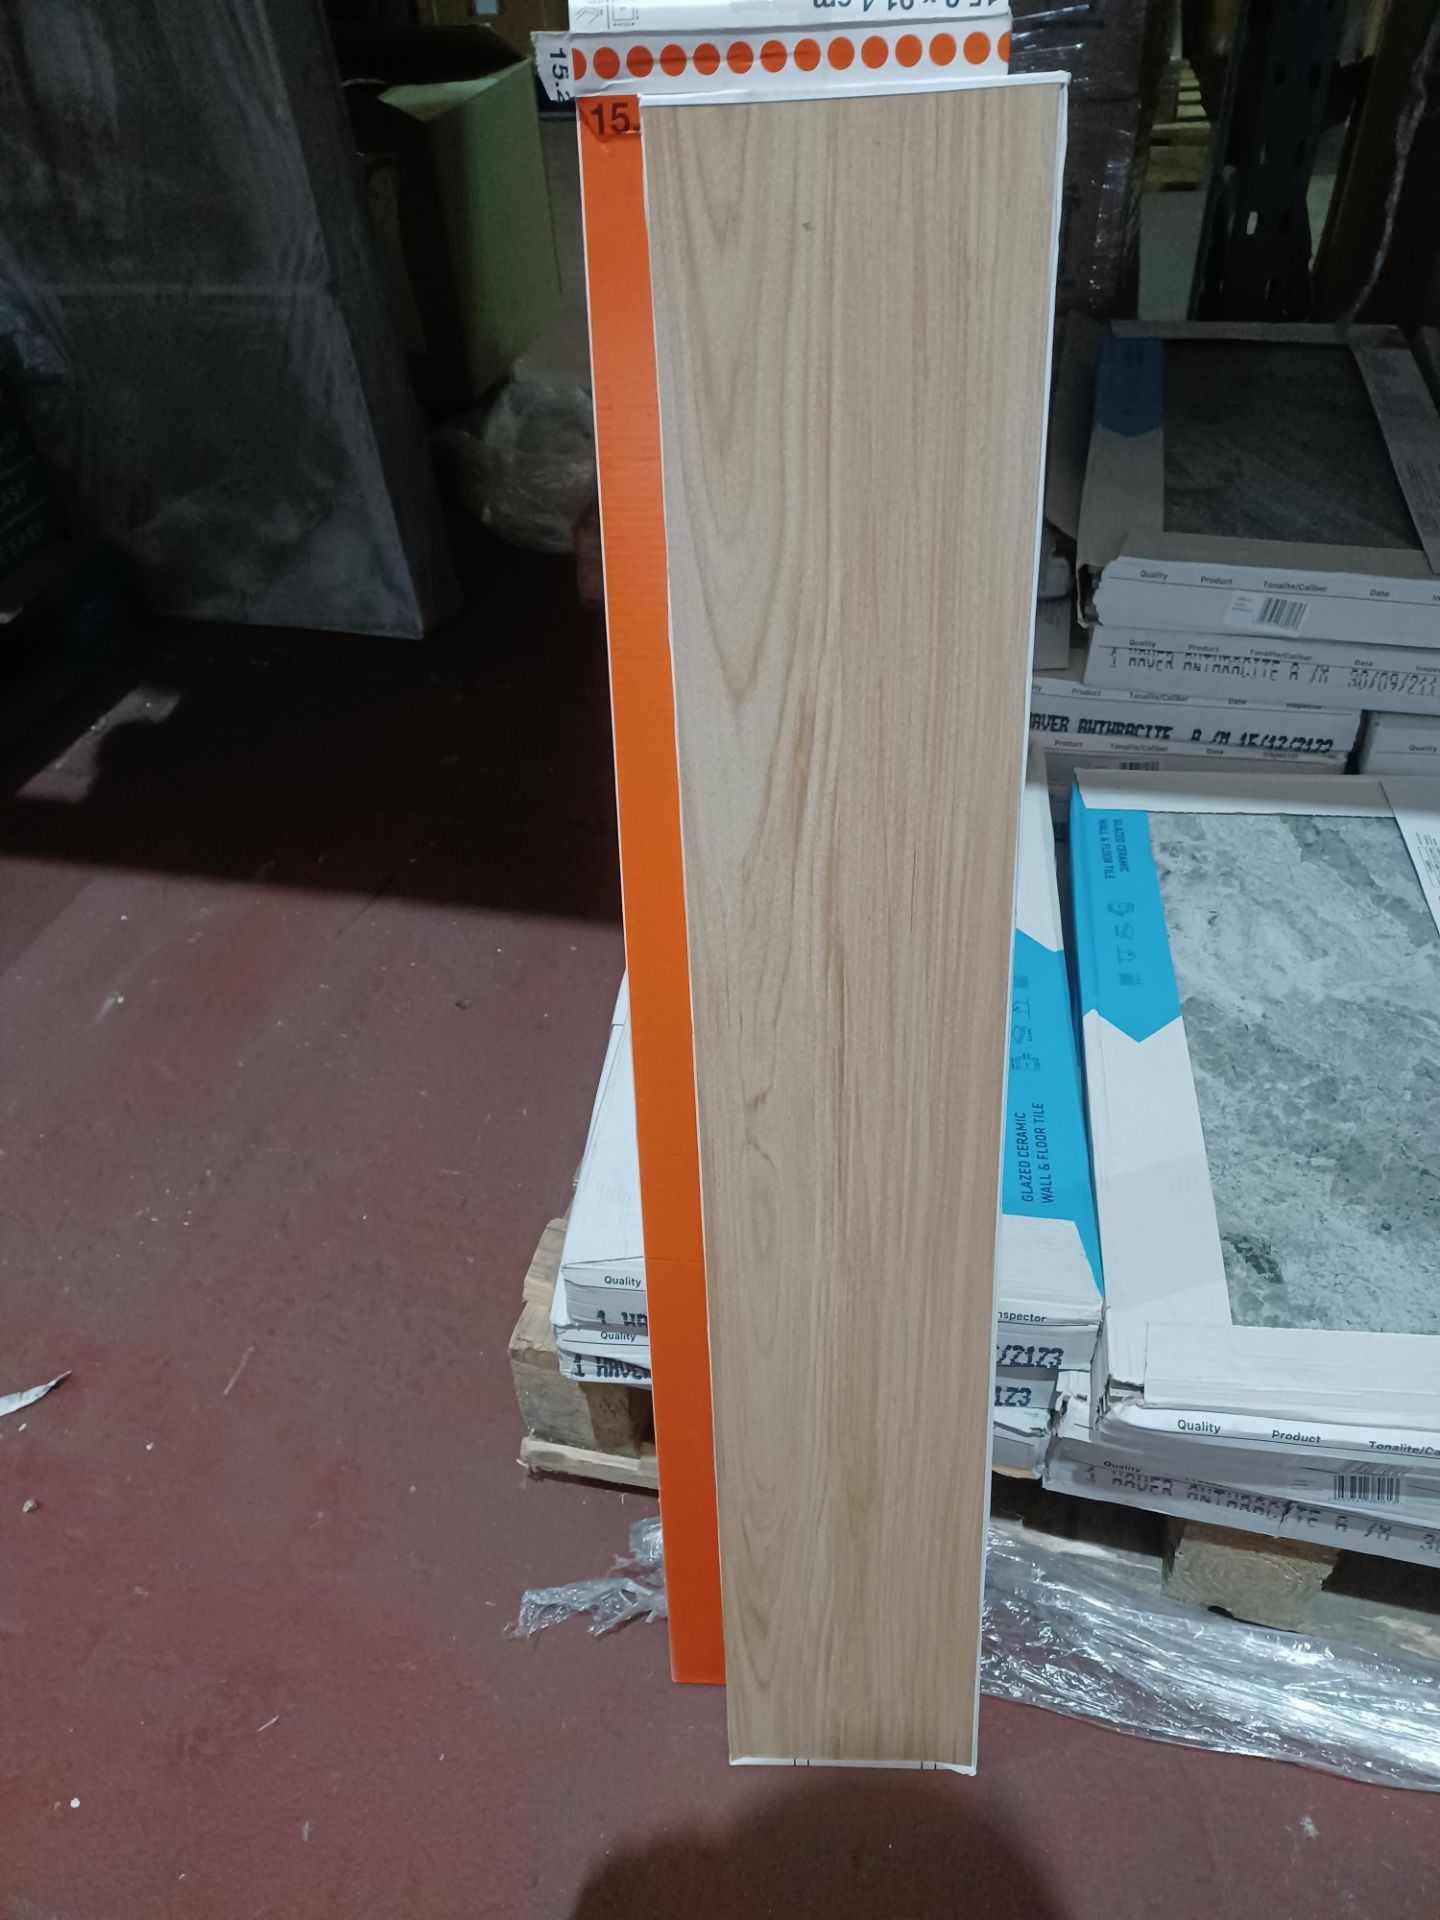 31 x PACKS OF Self Adhesive Vinyl Plank Wood Effect Flooring. Each pack contqains 0.83m2, giving